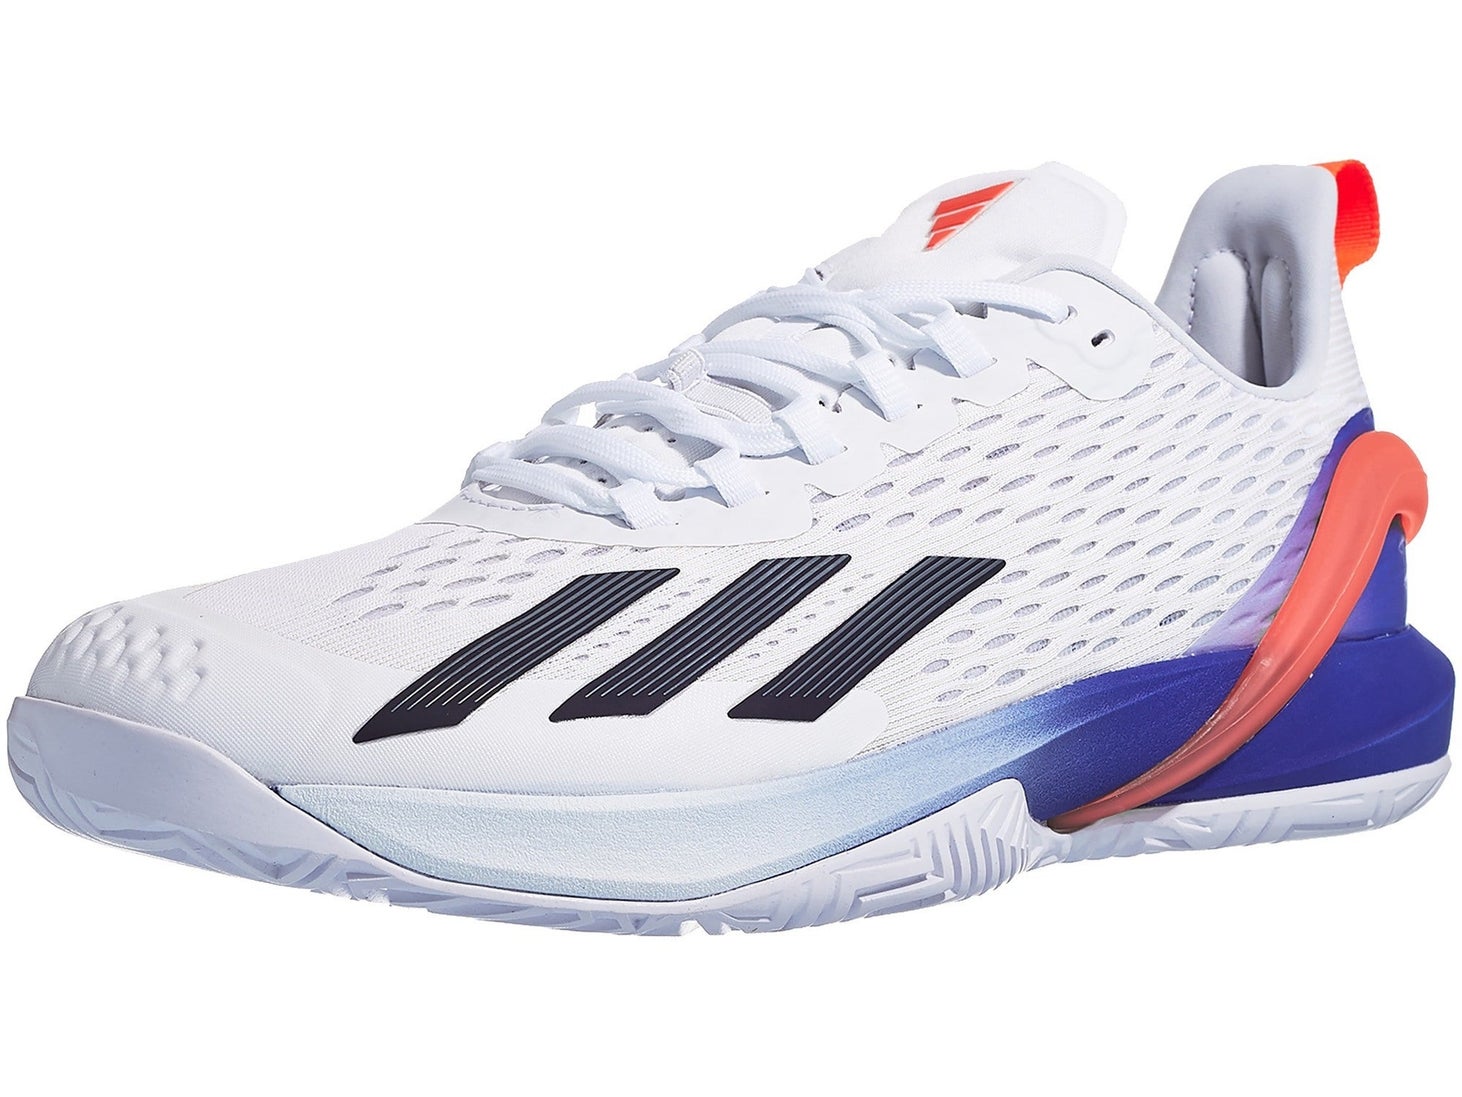 adidas adizero Cybersonic White/Blue/Red Men's Shoe | Tennis Only